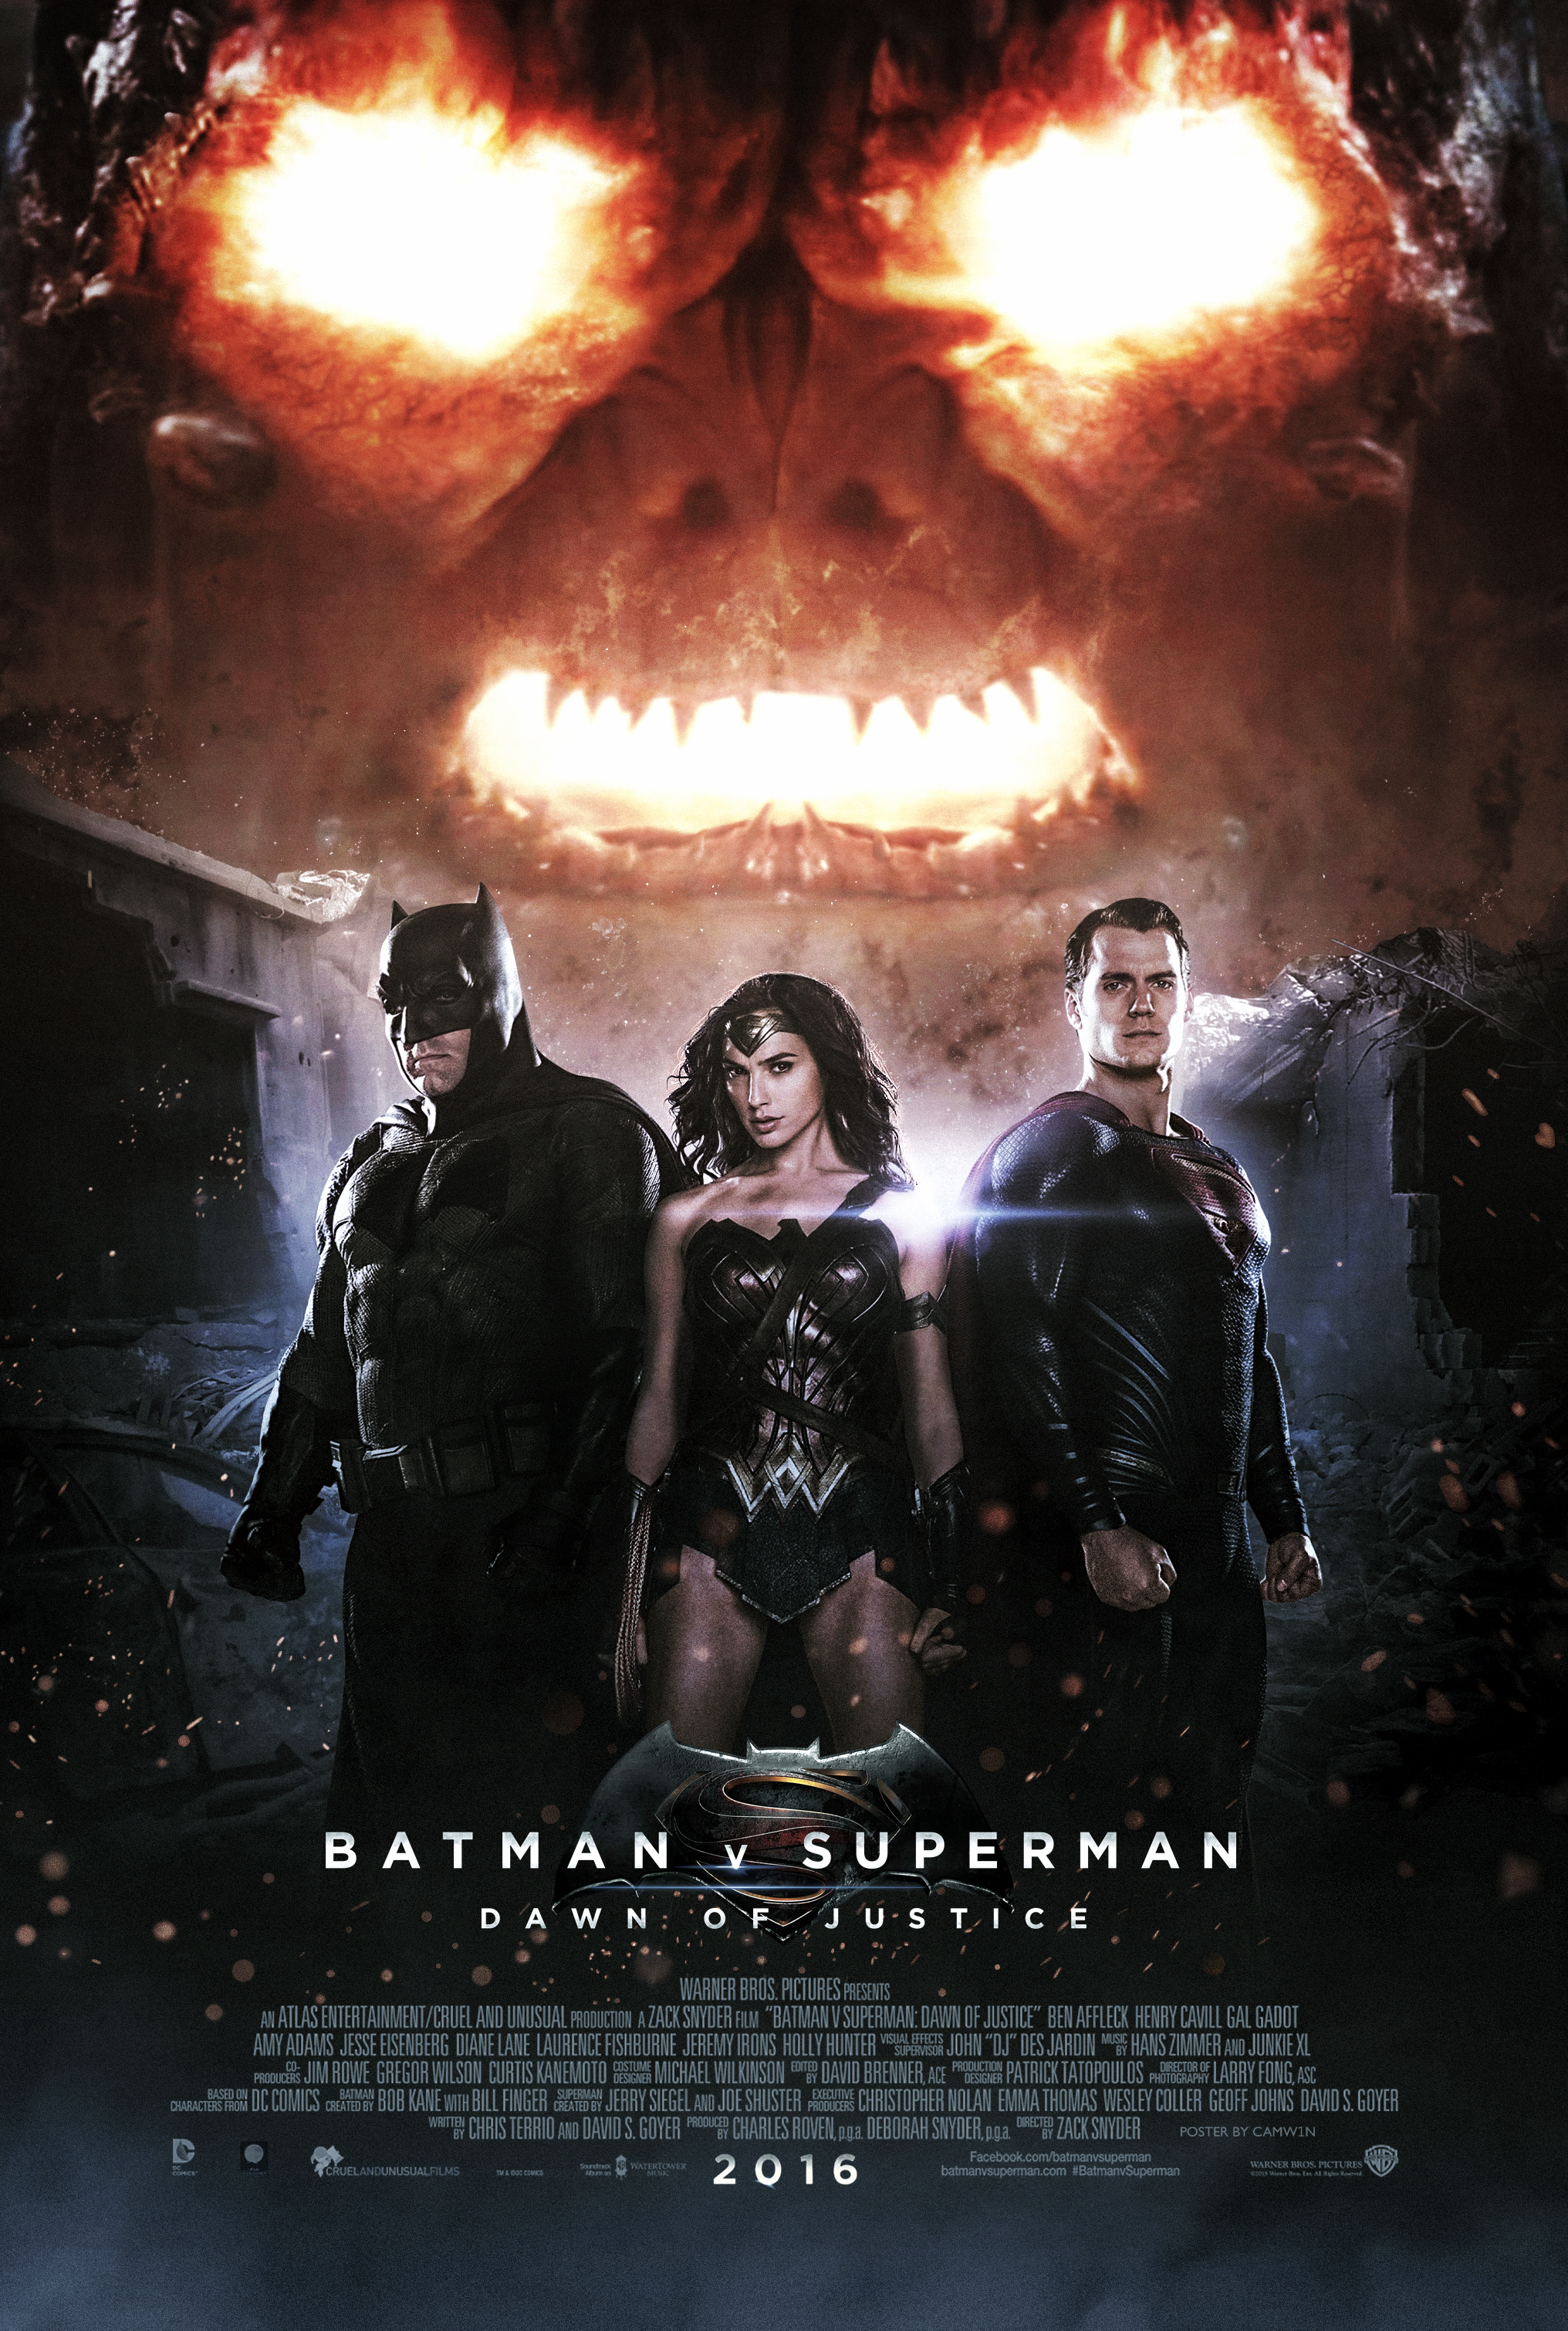 Batman V Superman (2016) - Doomsday Poster by CAMW1N on DeviantArt